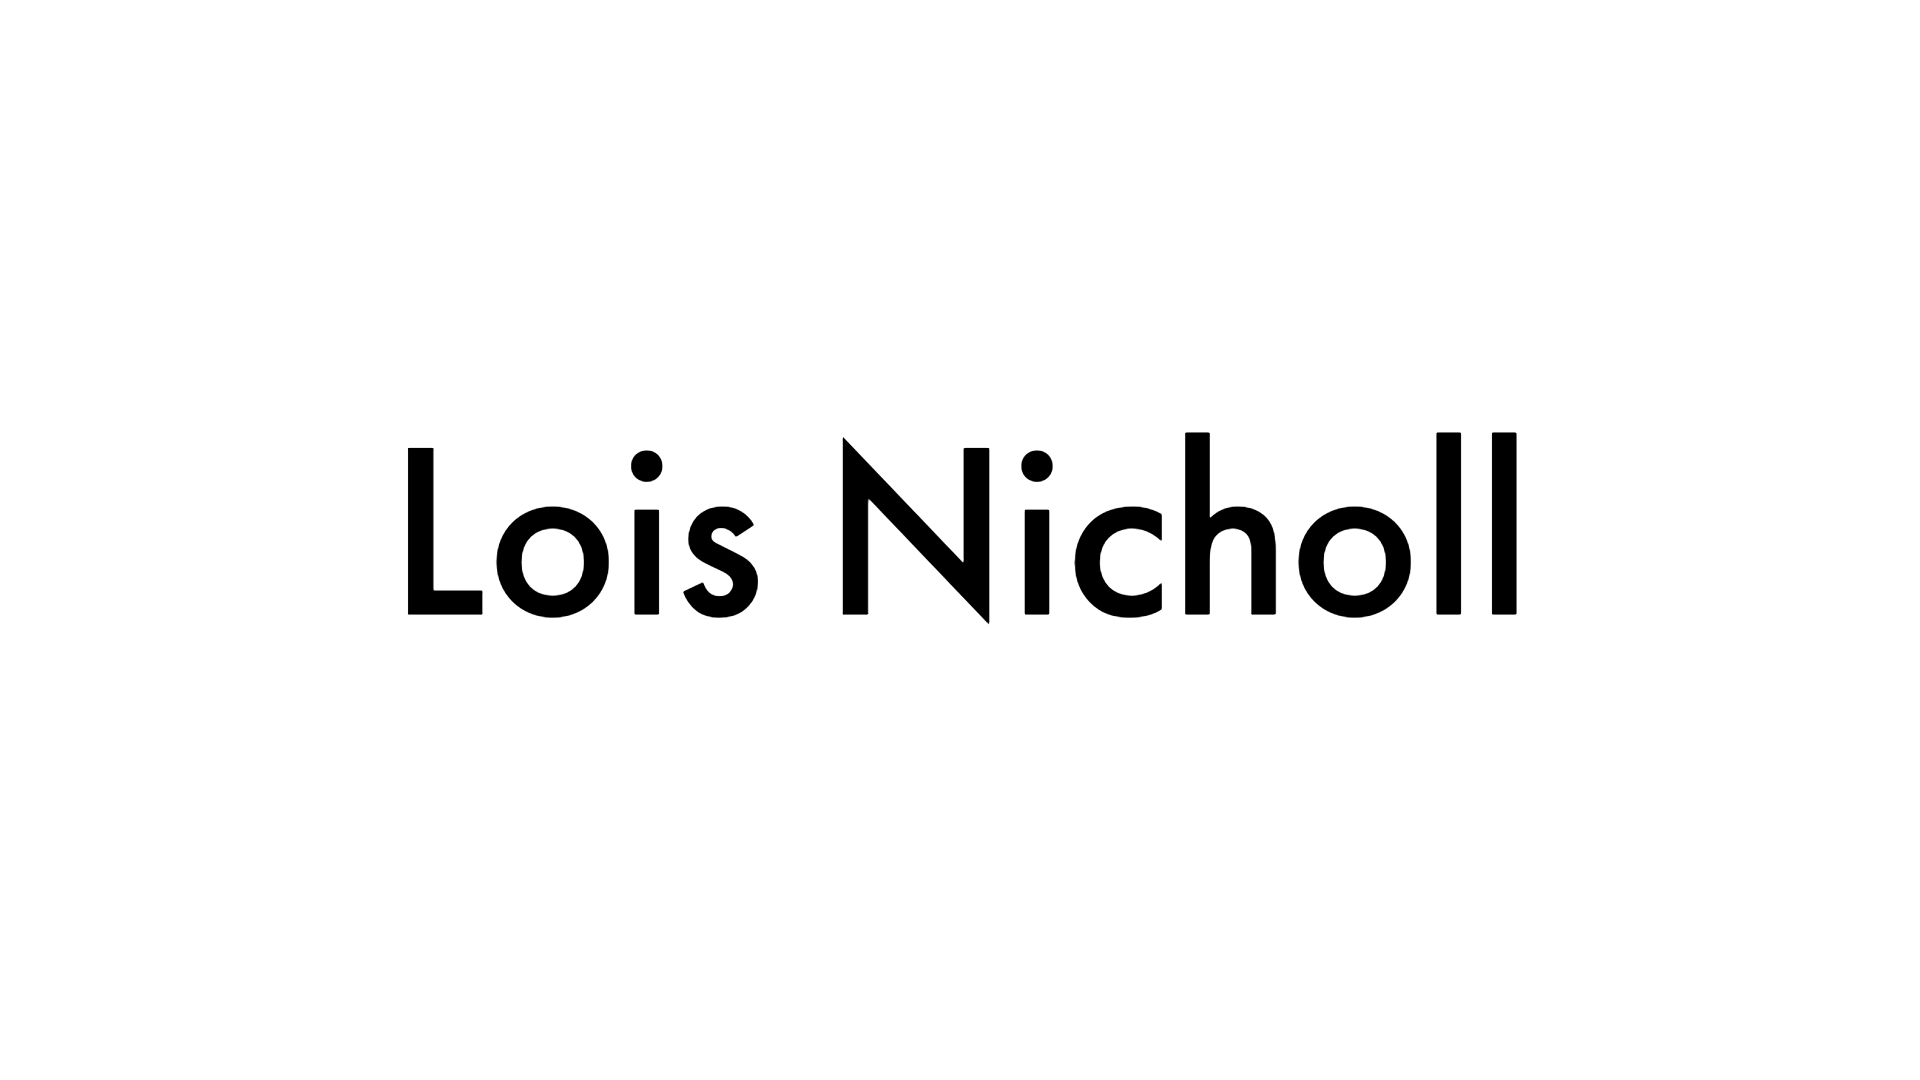 Lois Nicholl